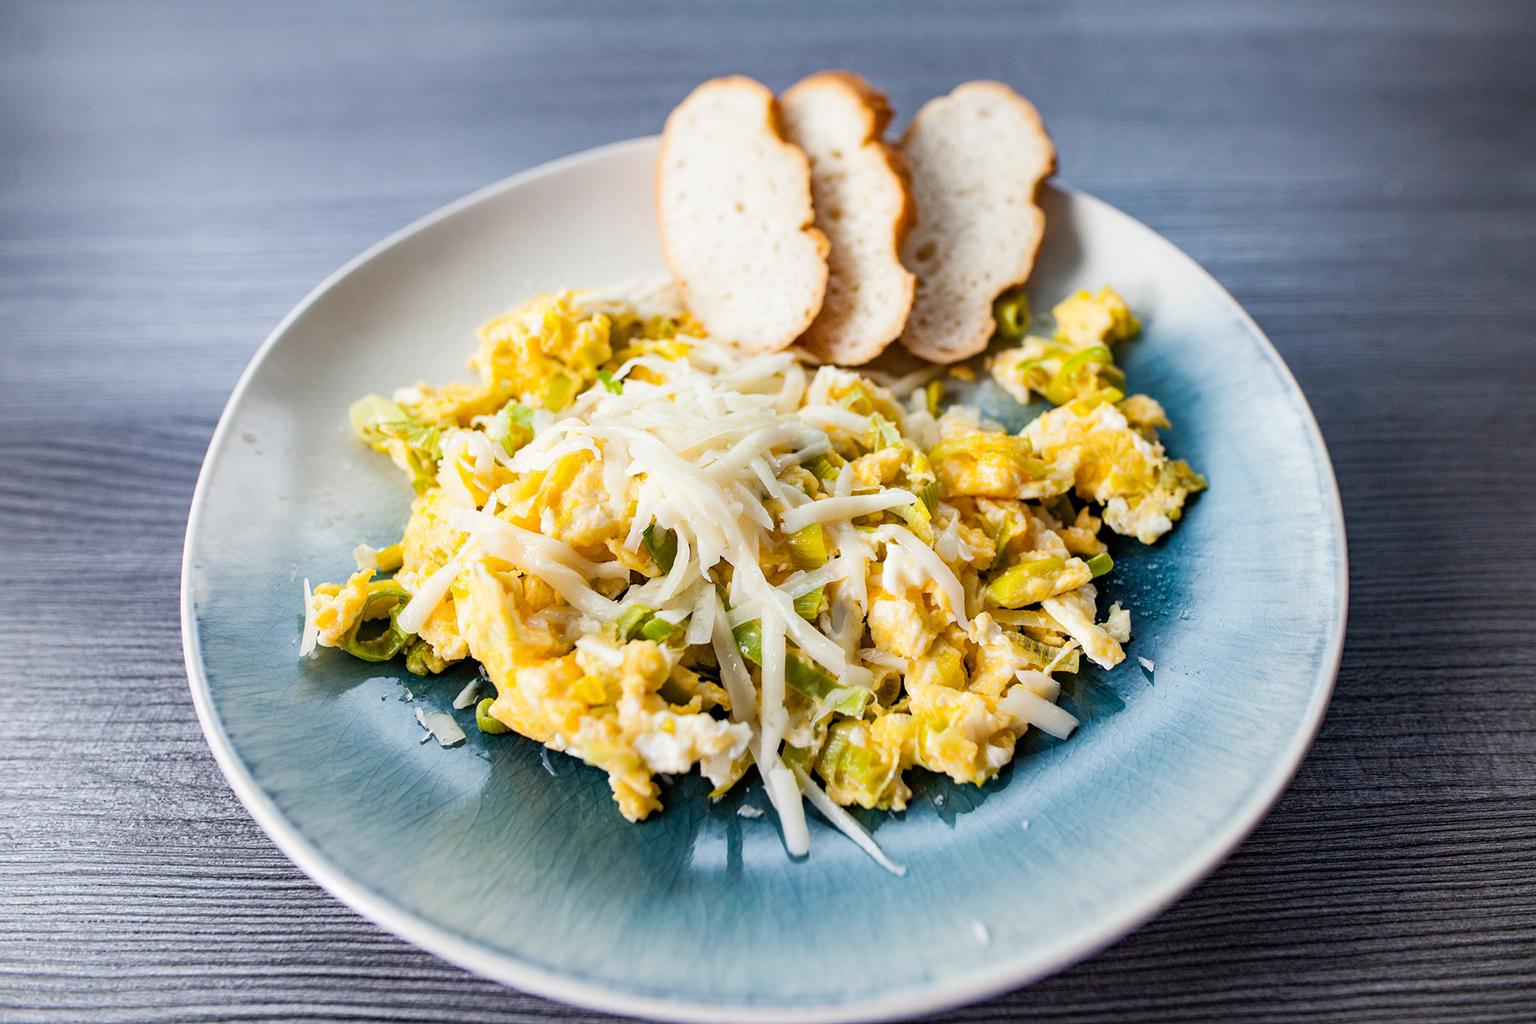 Завтрак по-французски: скрэмбл с луком пореем блюда из яиц,завтрак,кухни мира